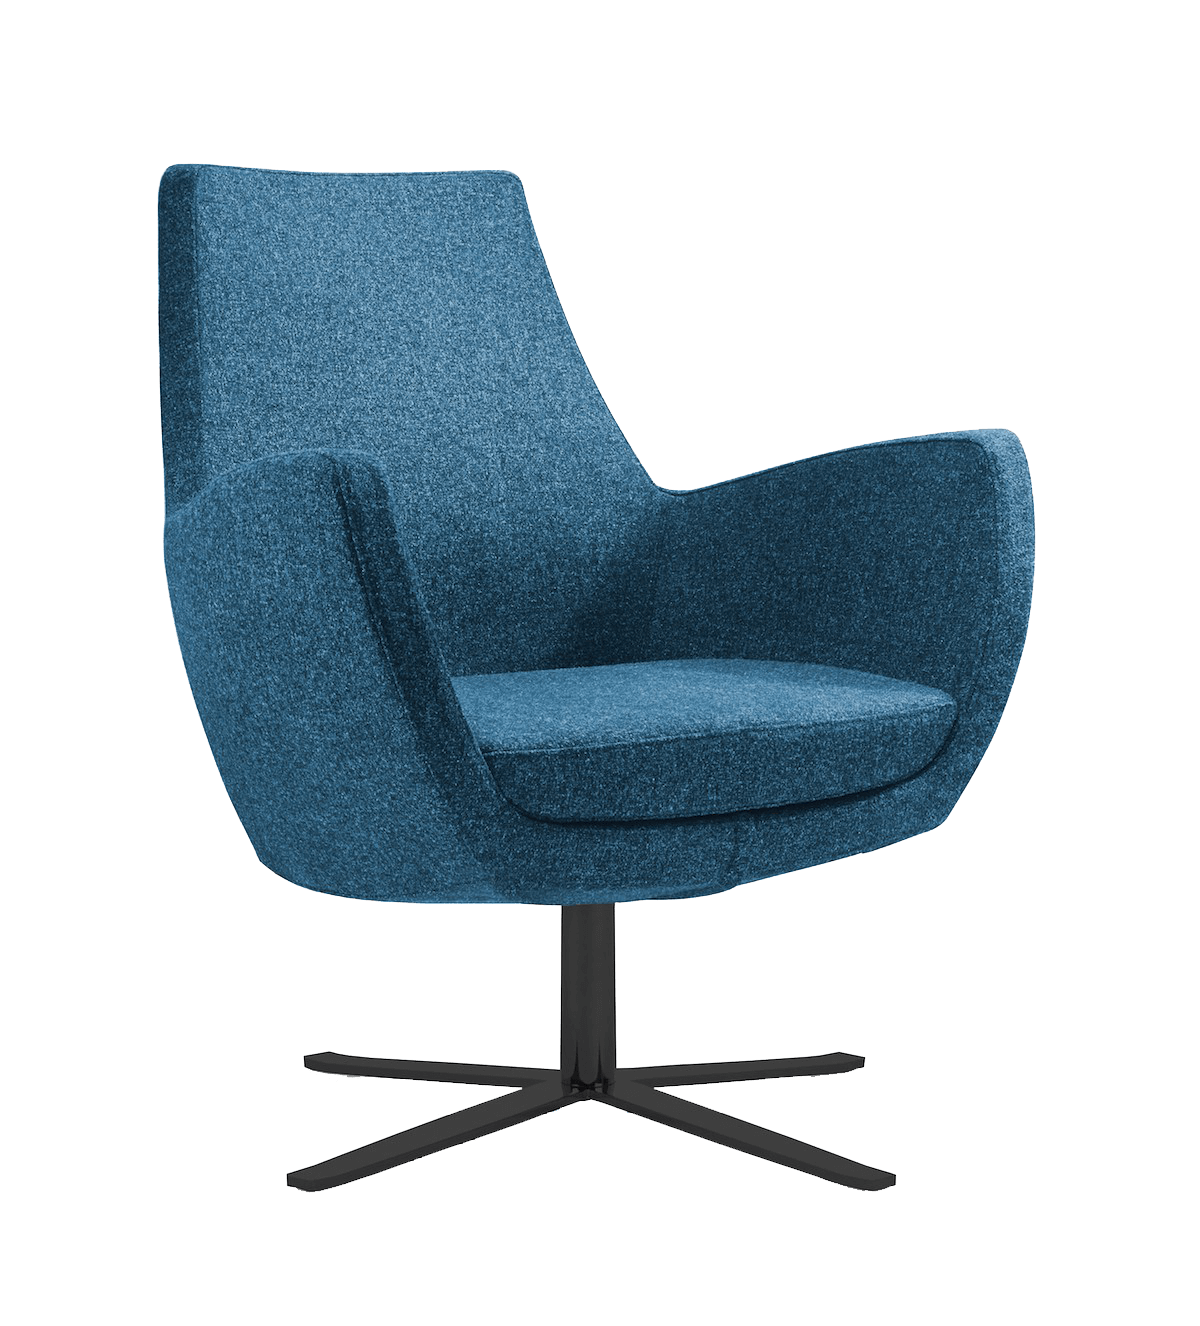 Chair Specfurn Commercial Furniture